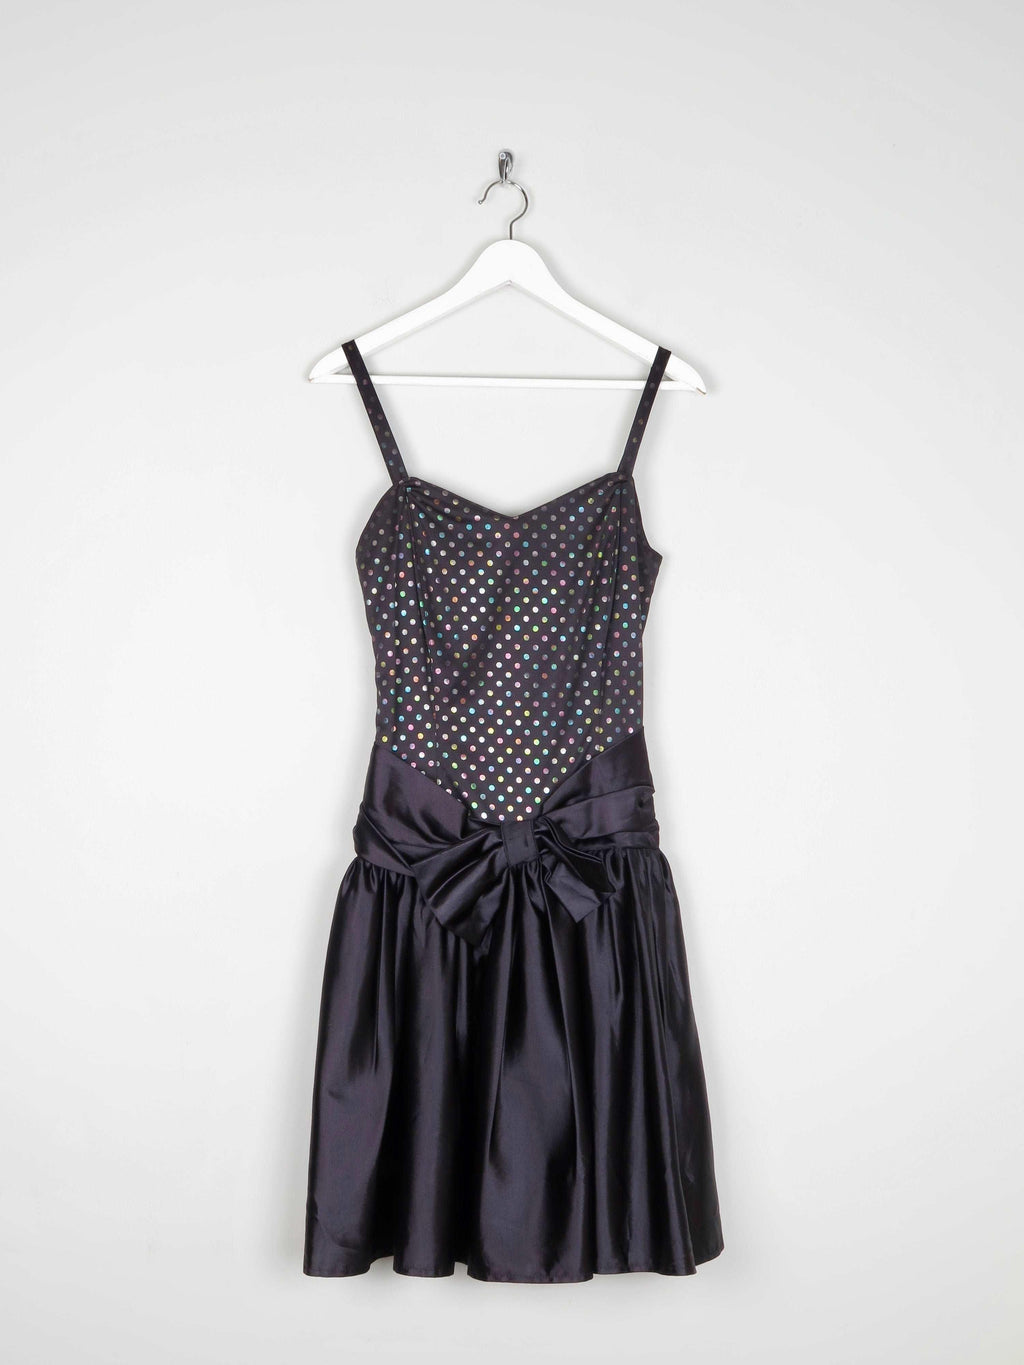 Black & Polka Dot Corset Party Dress 10 - The Harlequin